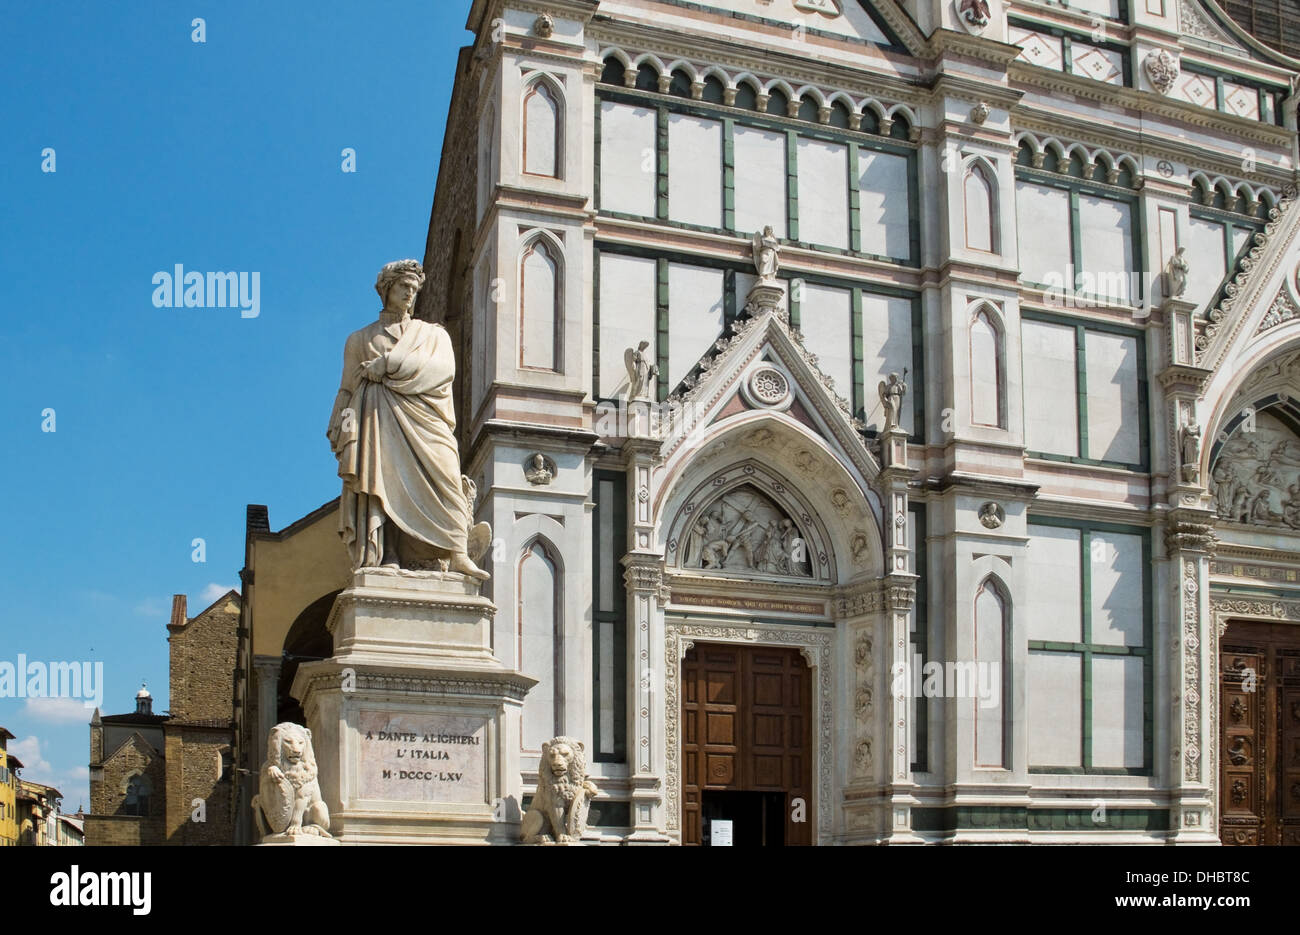 Die neugotische Fassade der Basilika di Santa Croce und Dante Alighieri Denkmal. Florenz, Italien Stockfoto